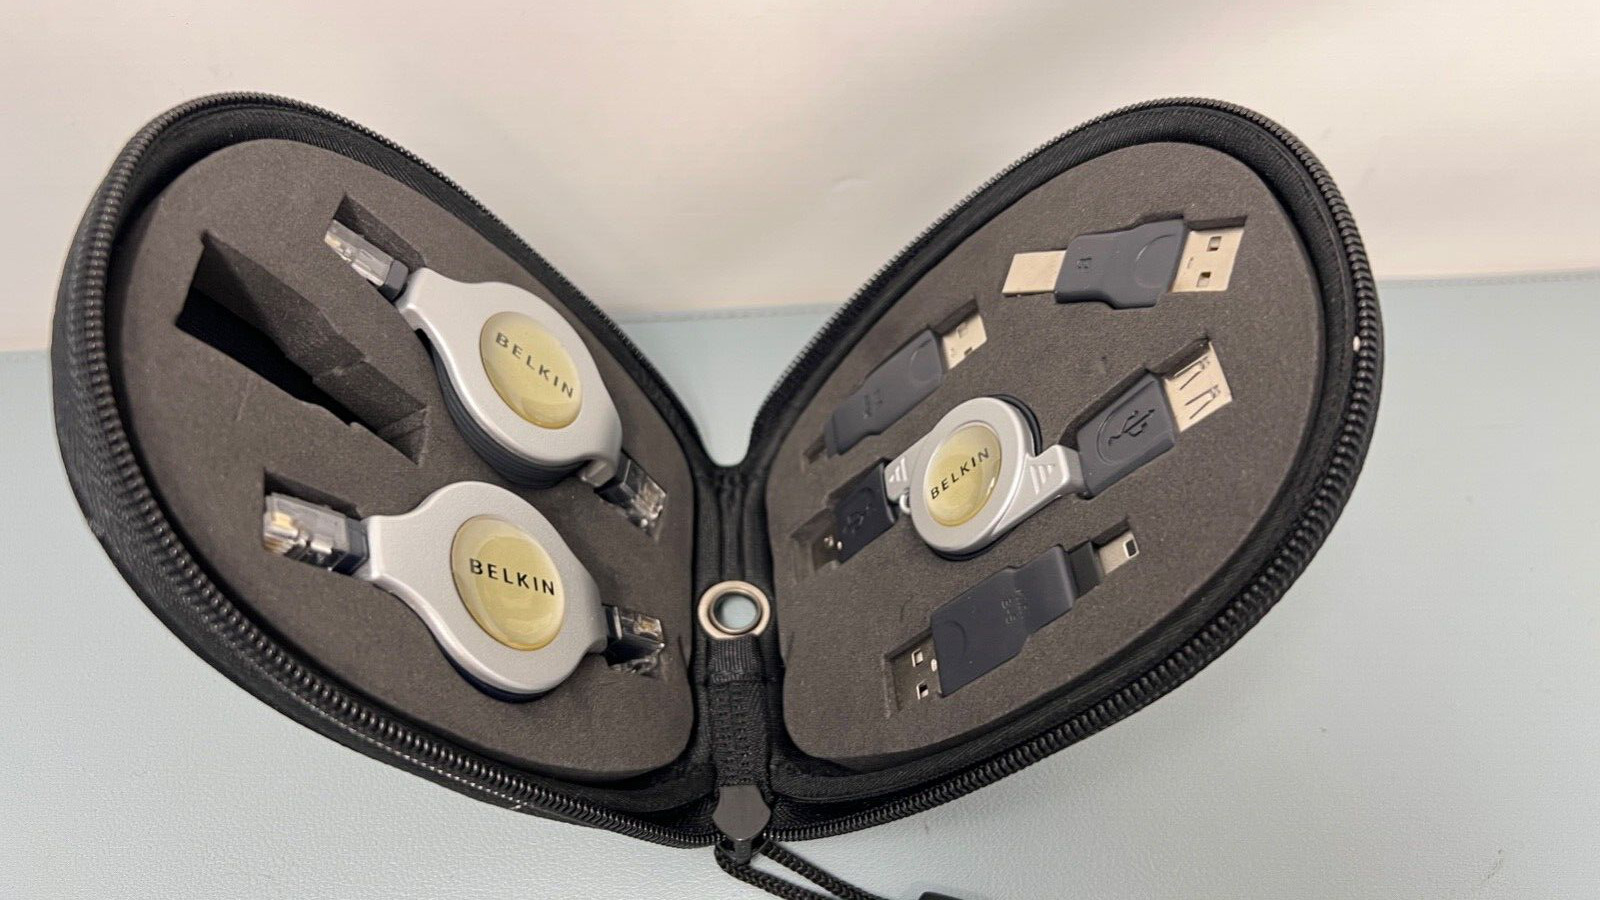 Nice Travel Set of Assorted Belkin Connectors: USB, Ethernet and More